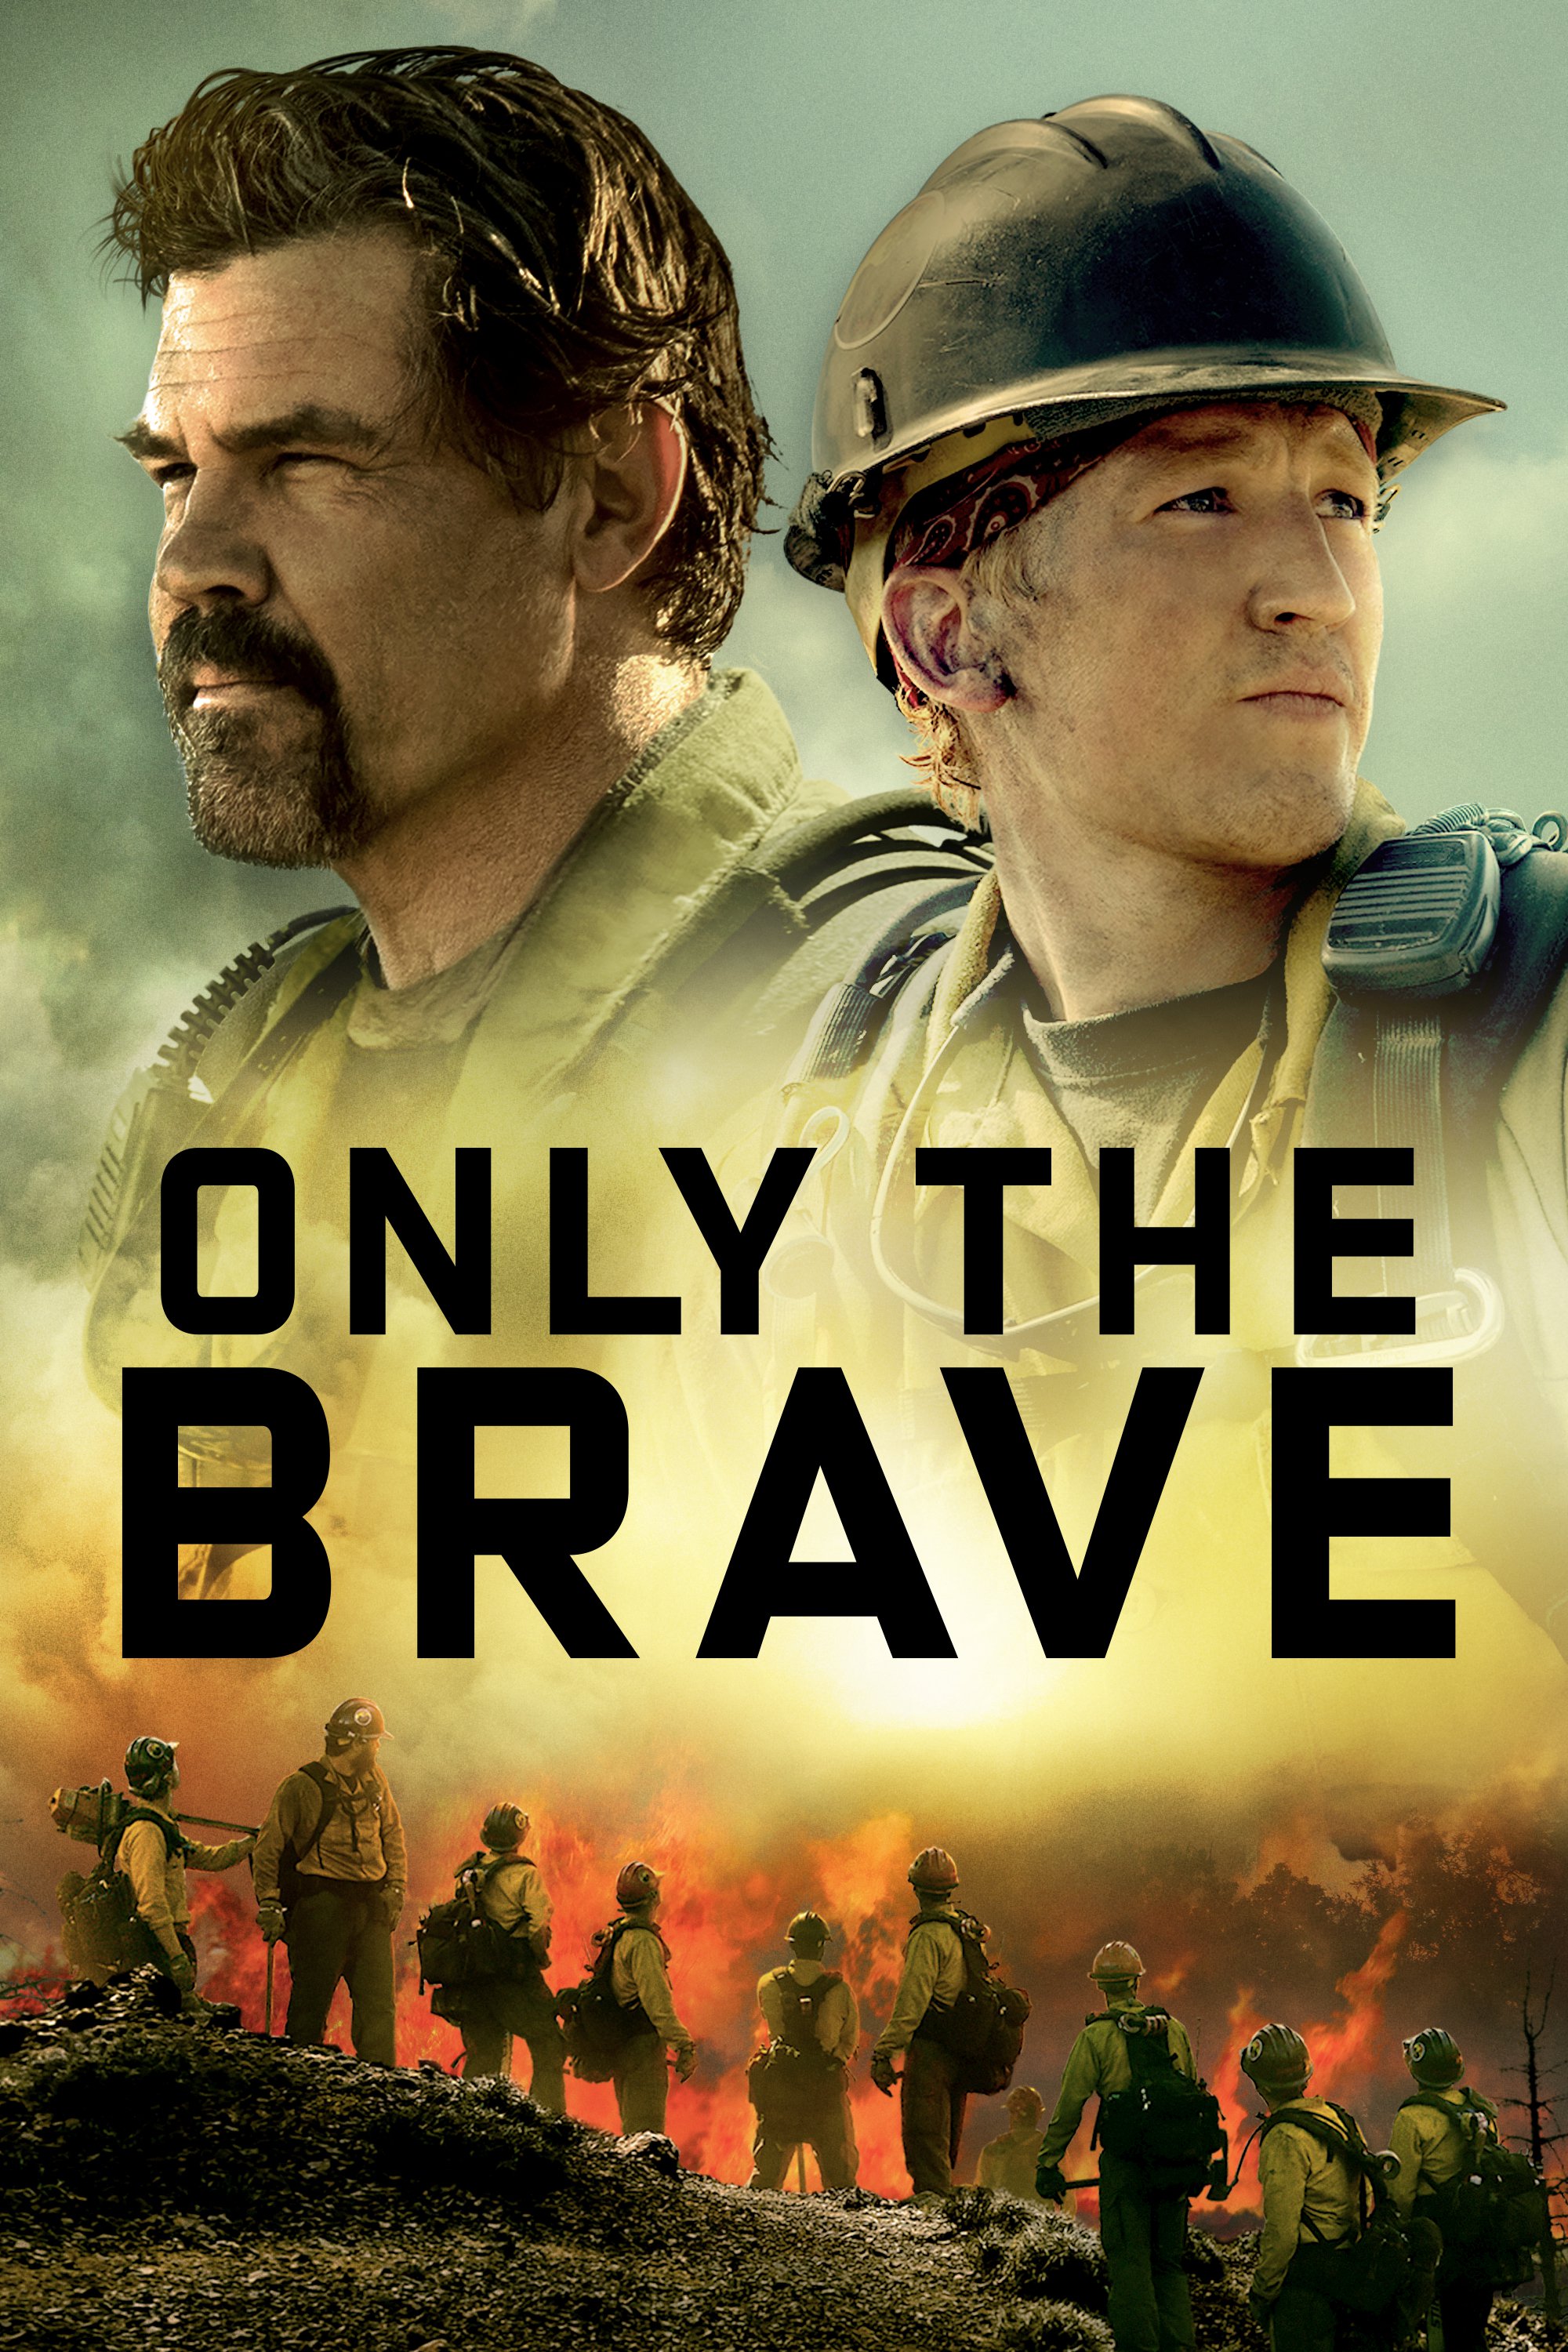 brave 2 watch full movie